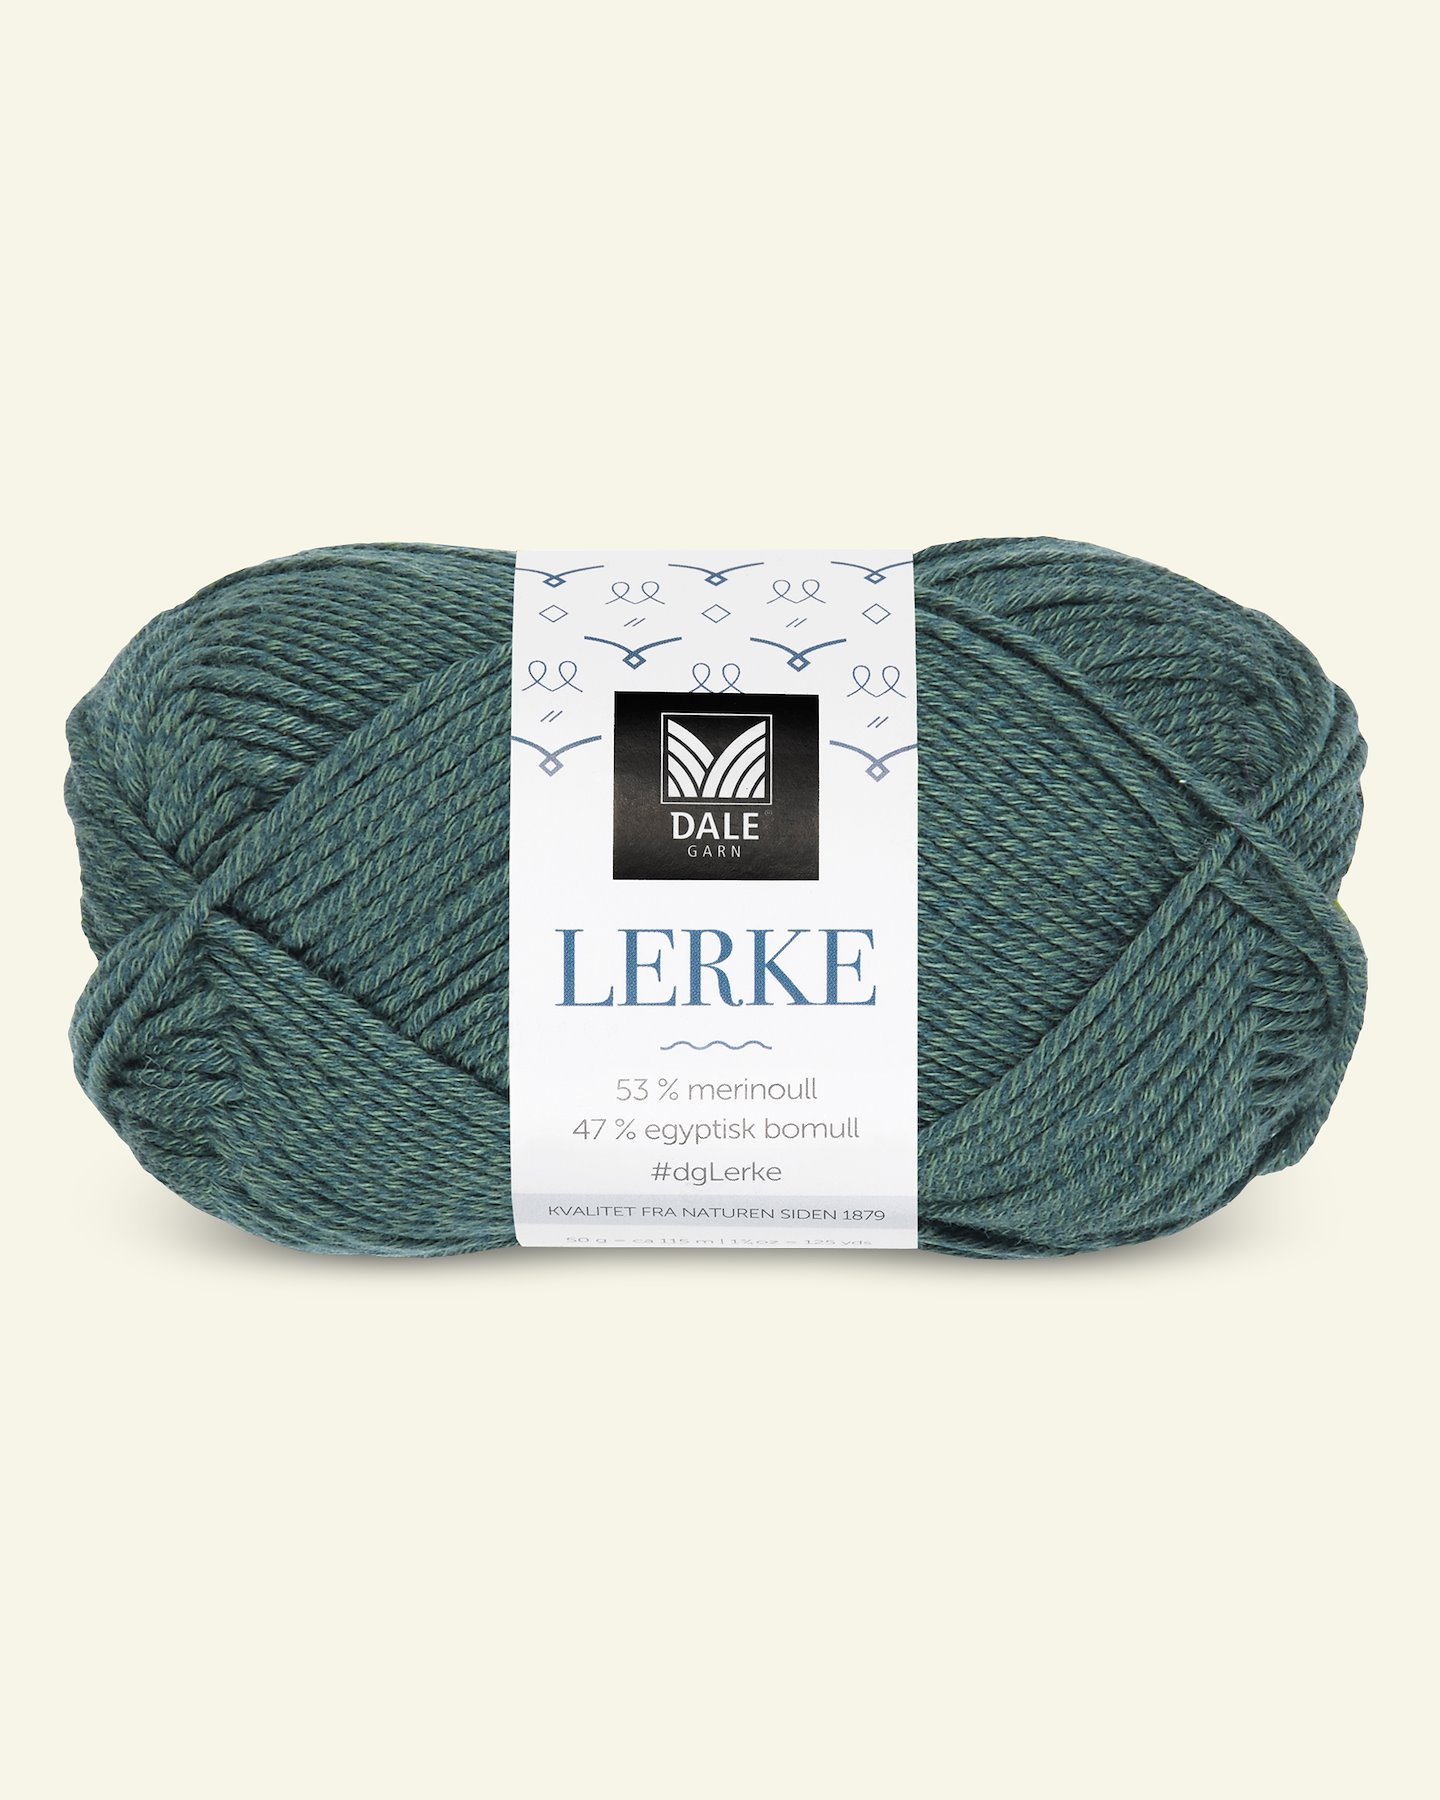 Dale Garn, merino cotton yarn "Lerke", emerald green (8112) 90000847_pack